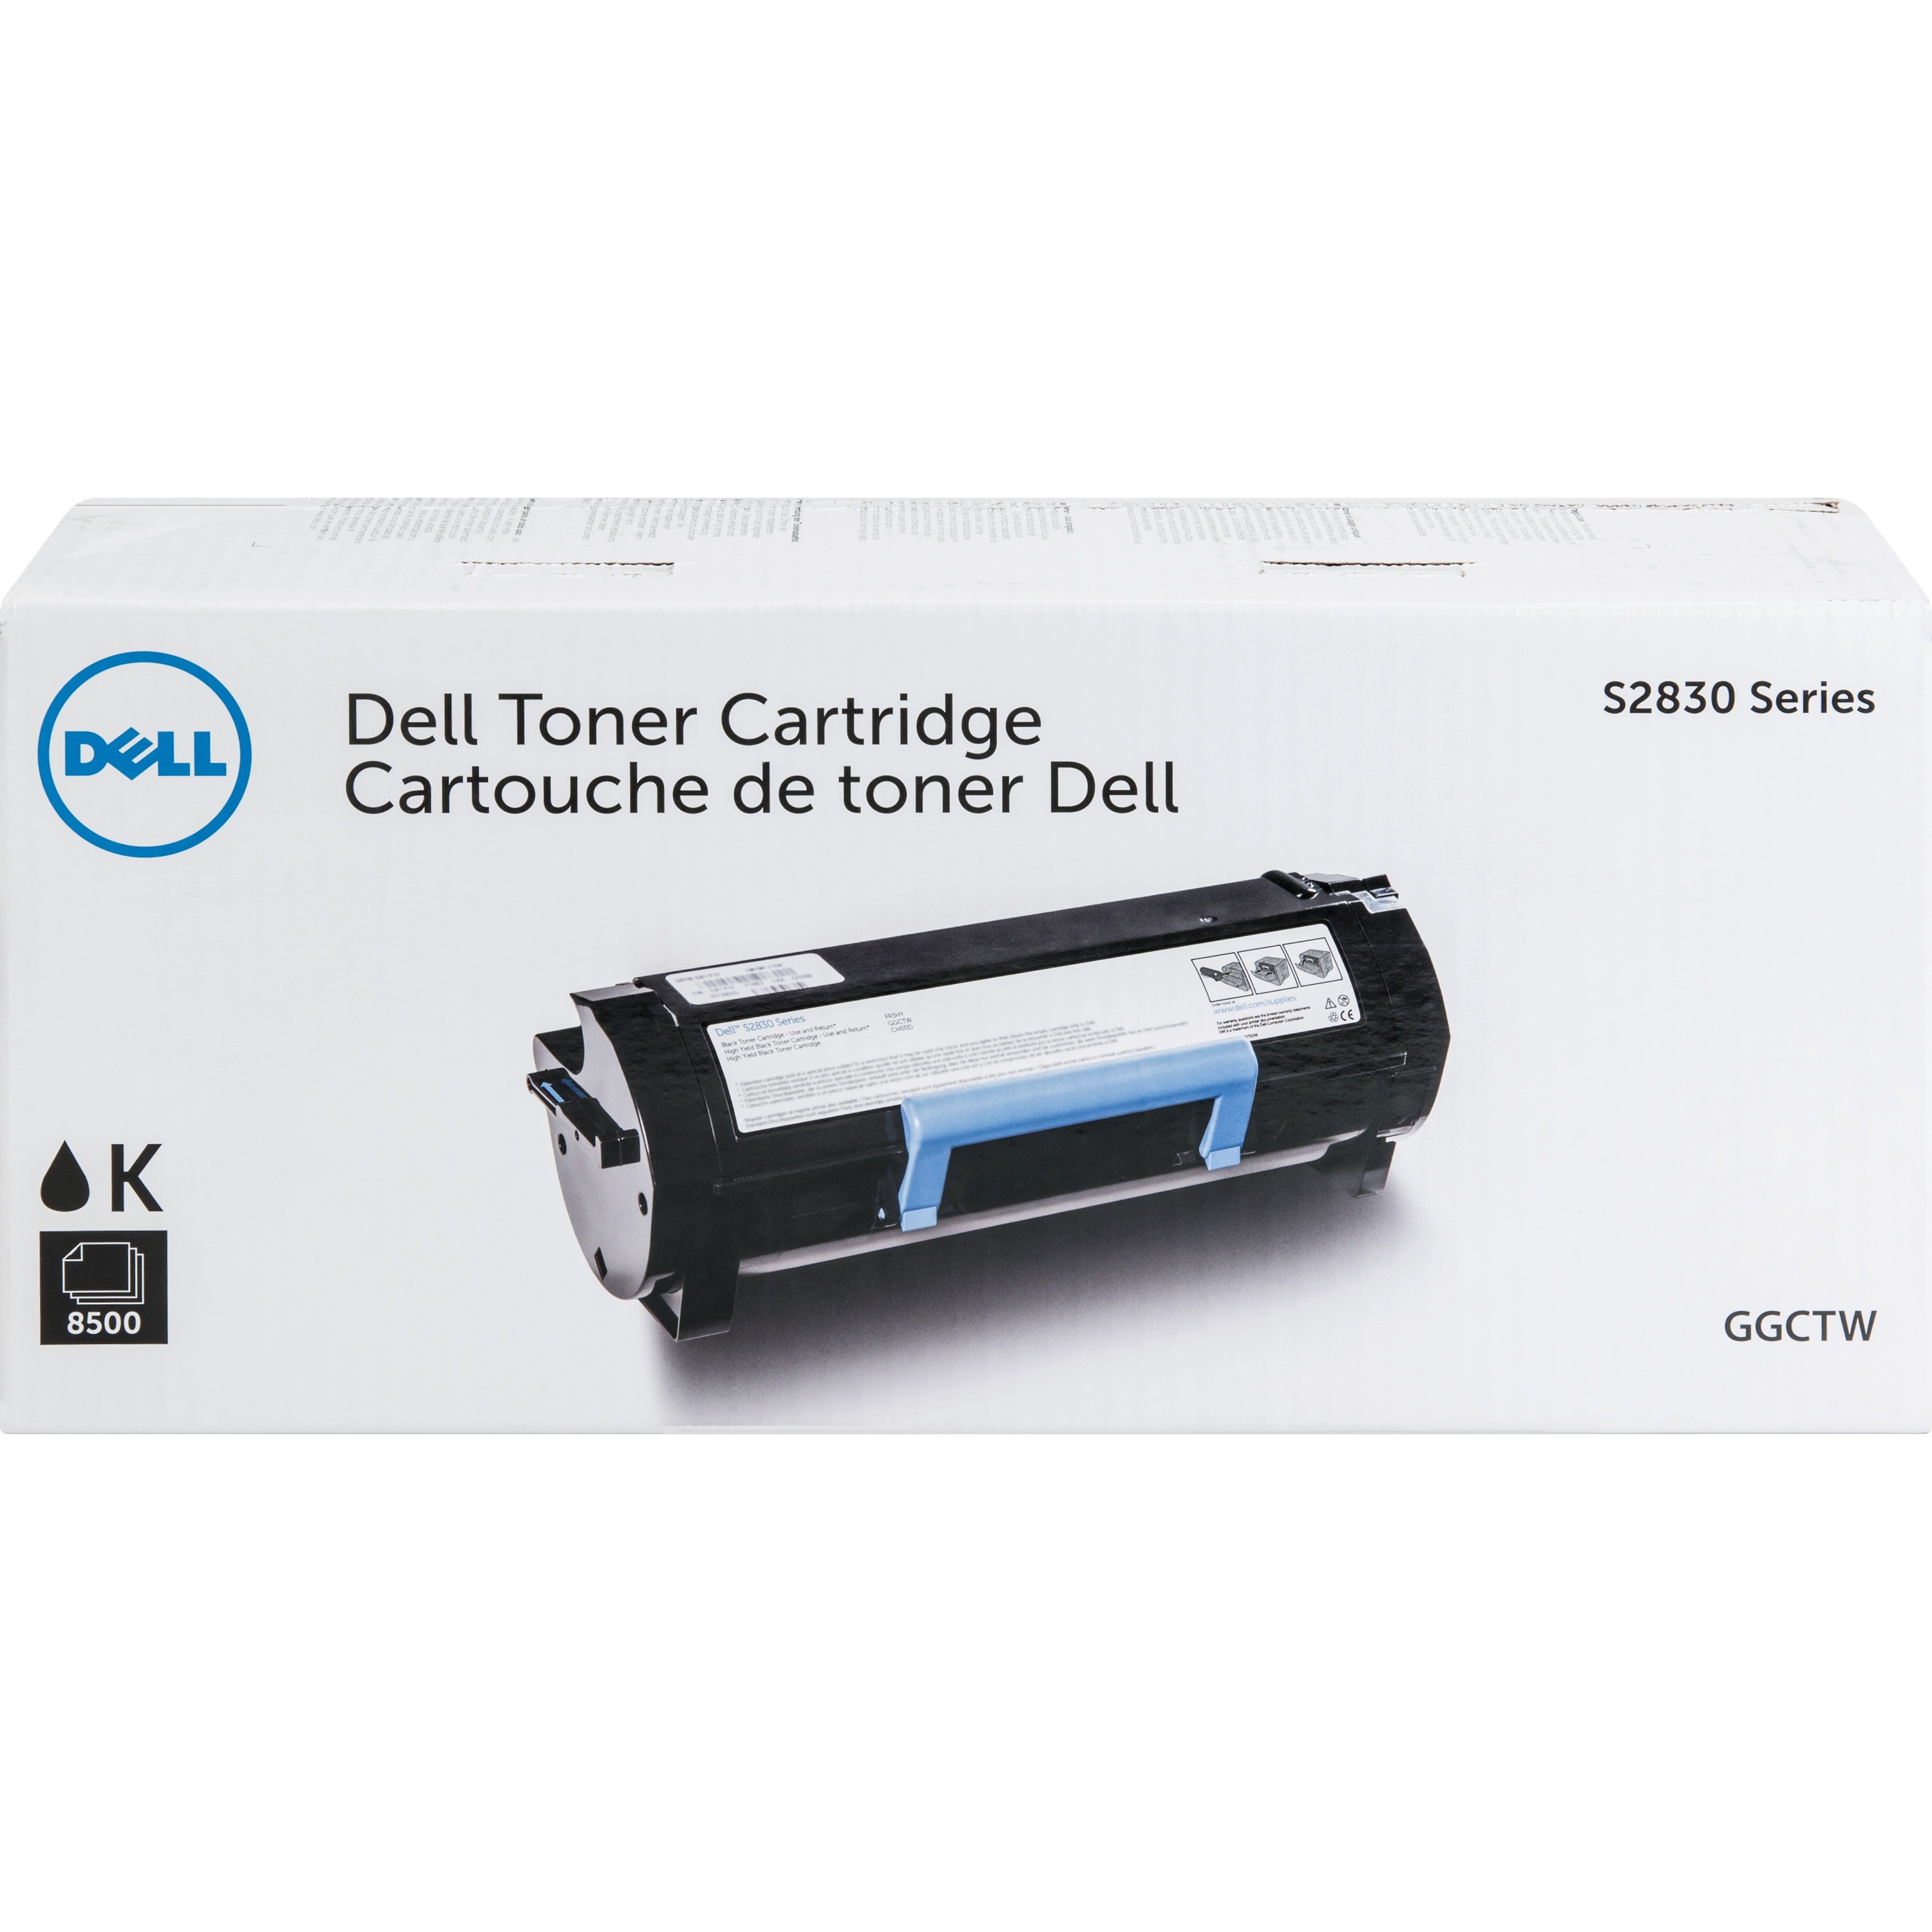 Dell Original Toner Cartridge - Black